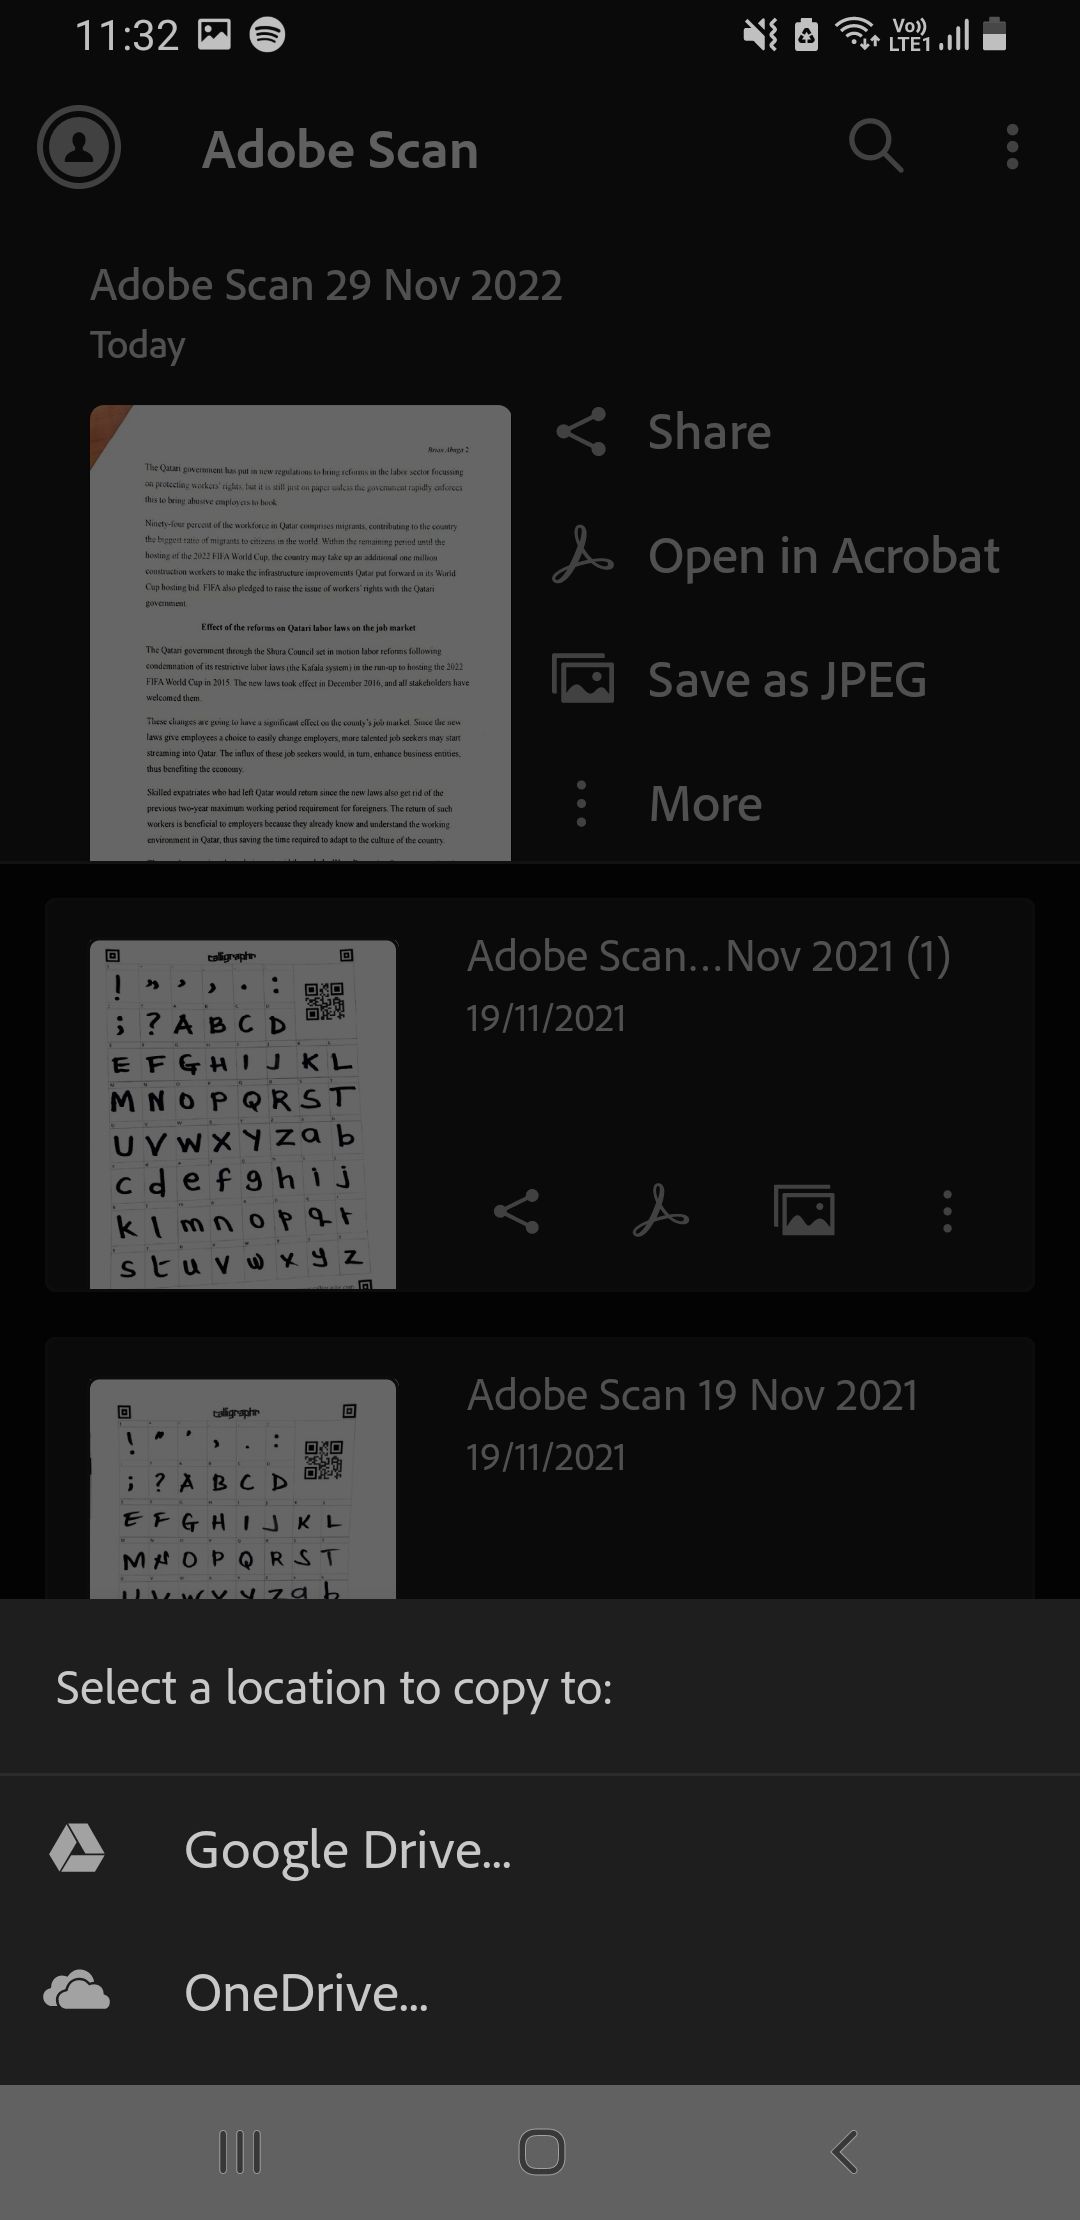 Adobe Scan menu options